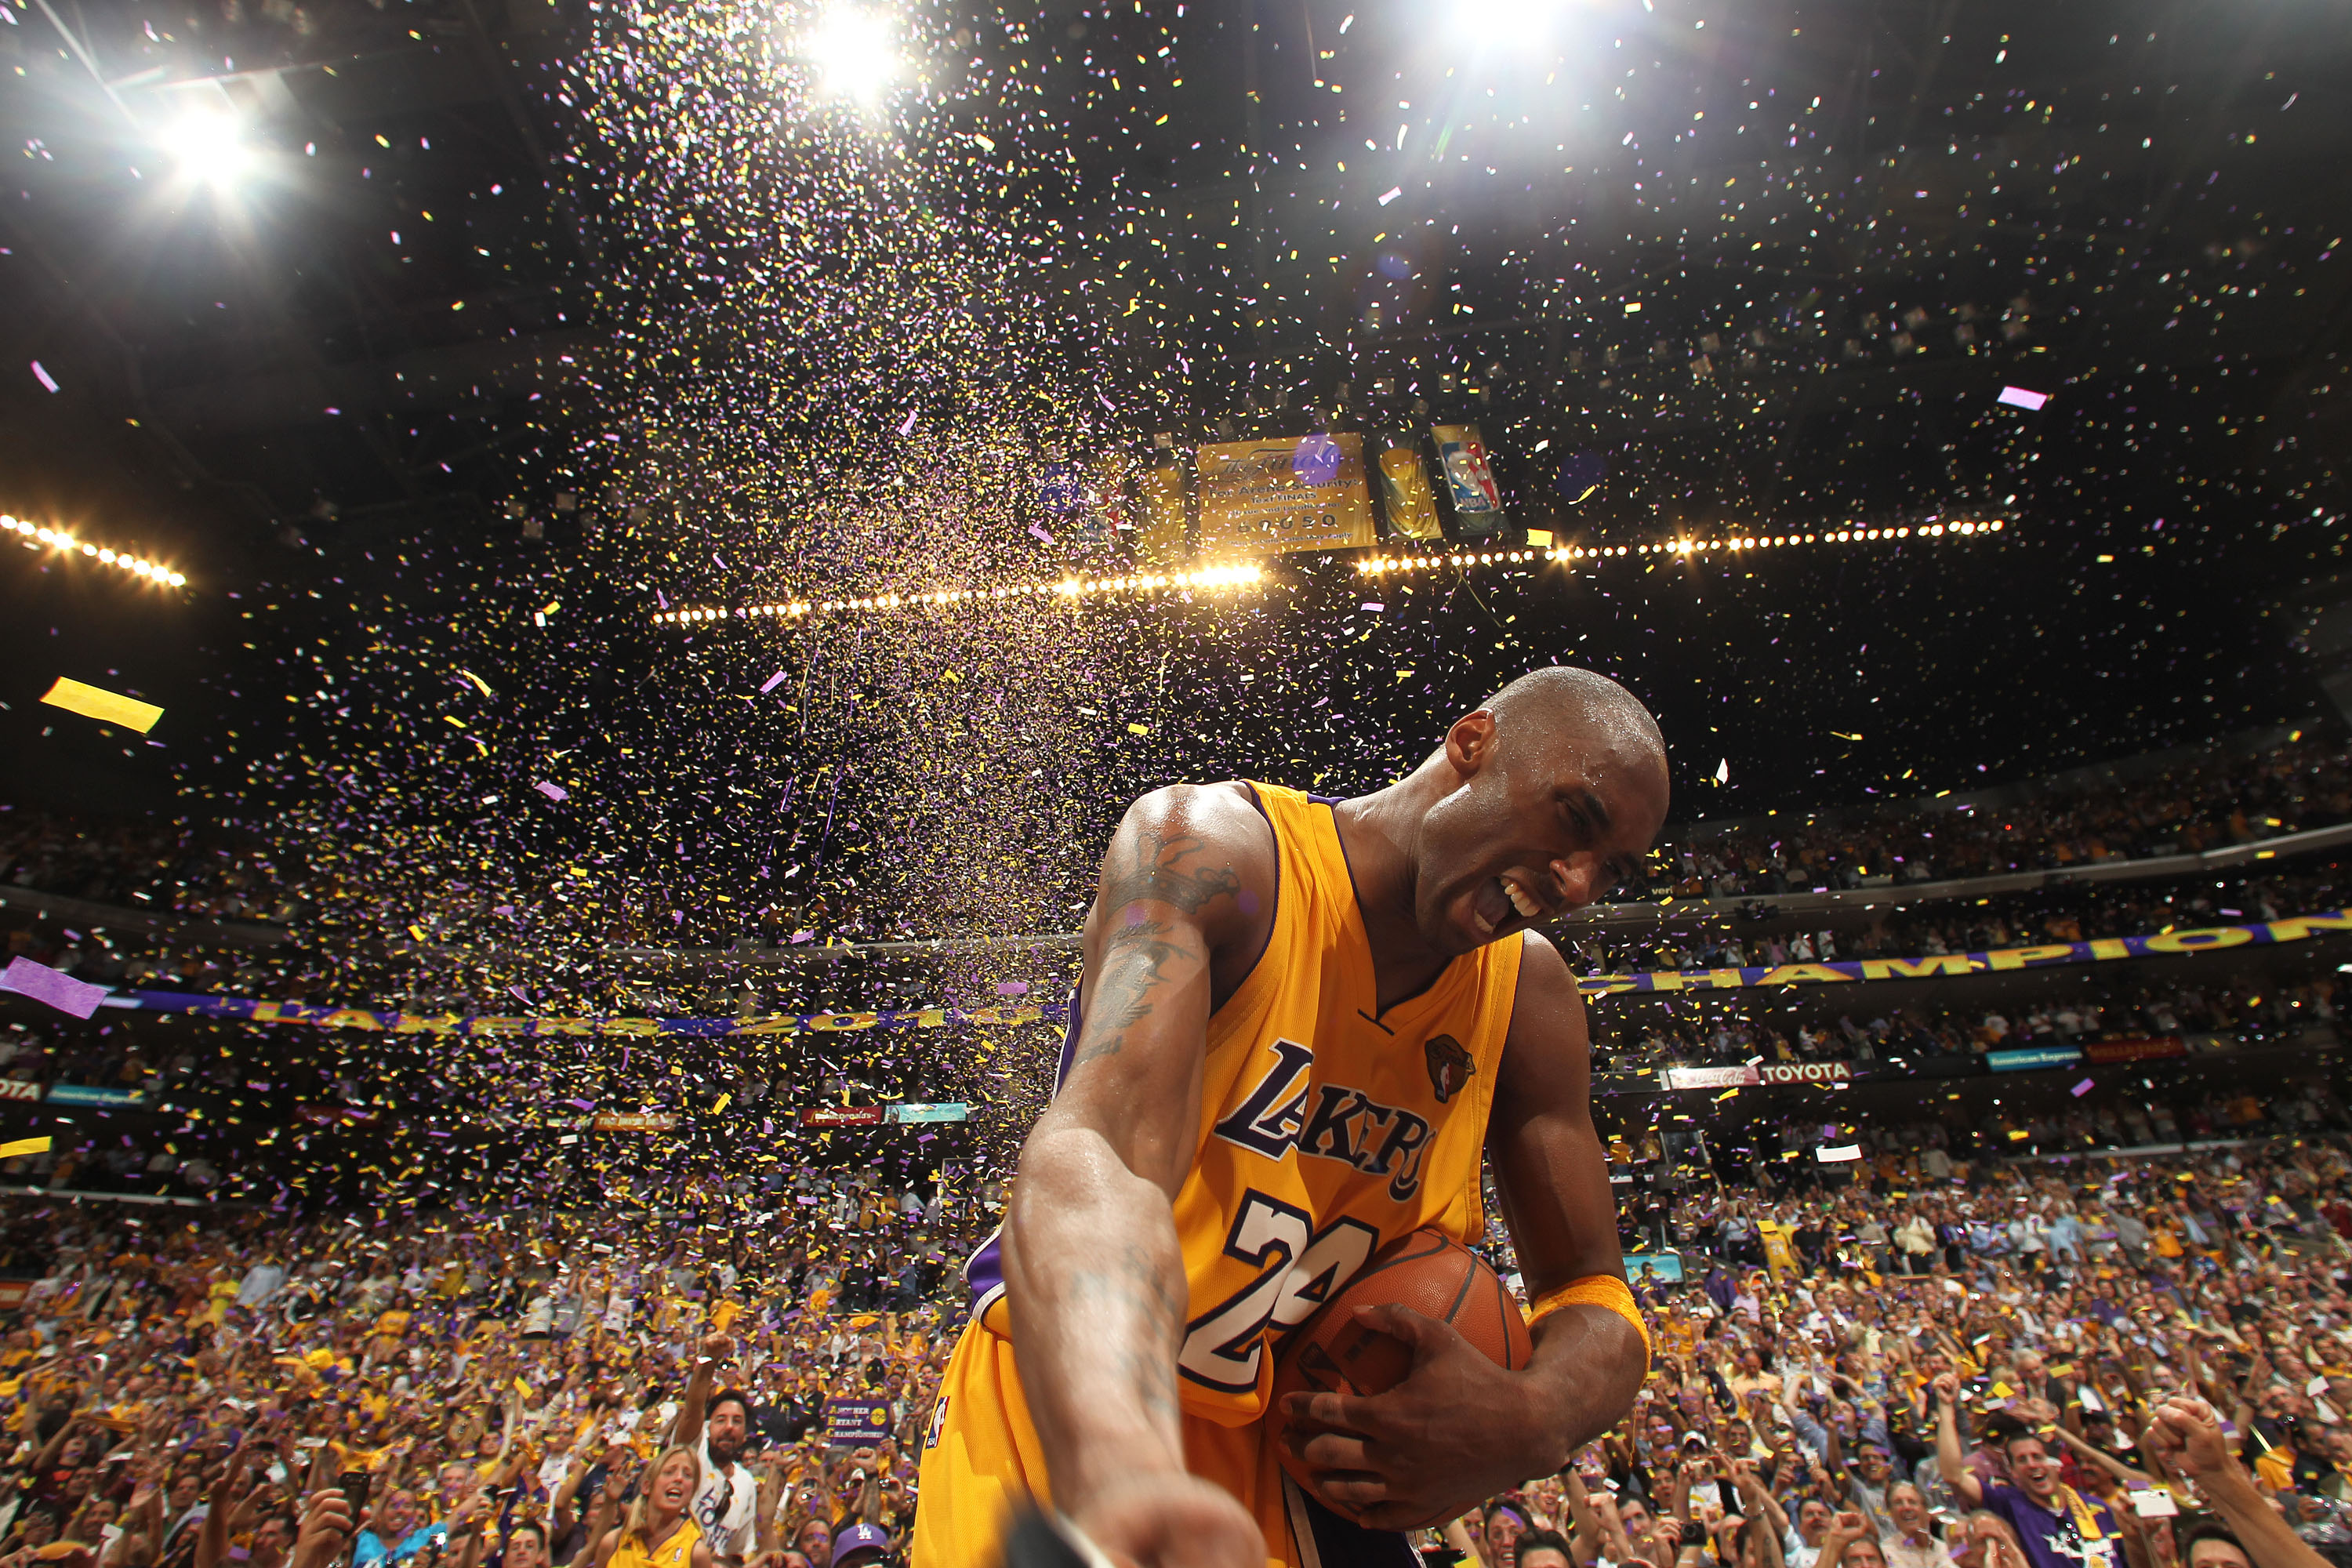 NBA History: Kobe Bryant's career